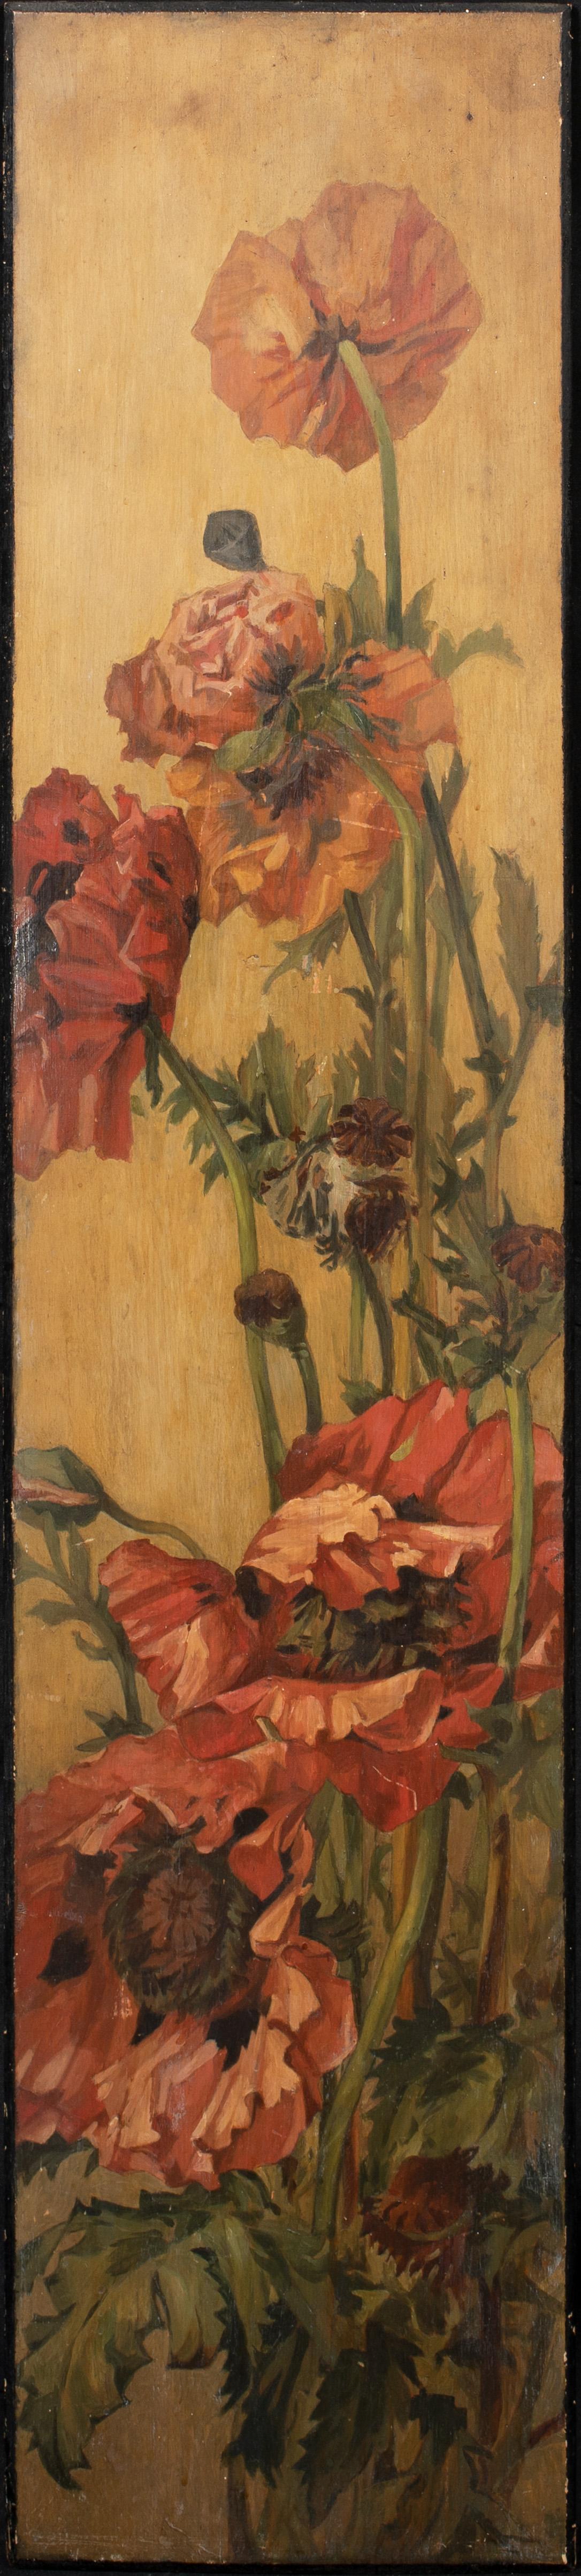 Still Life Of Poppies, 19th Century 